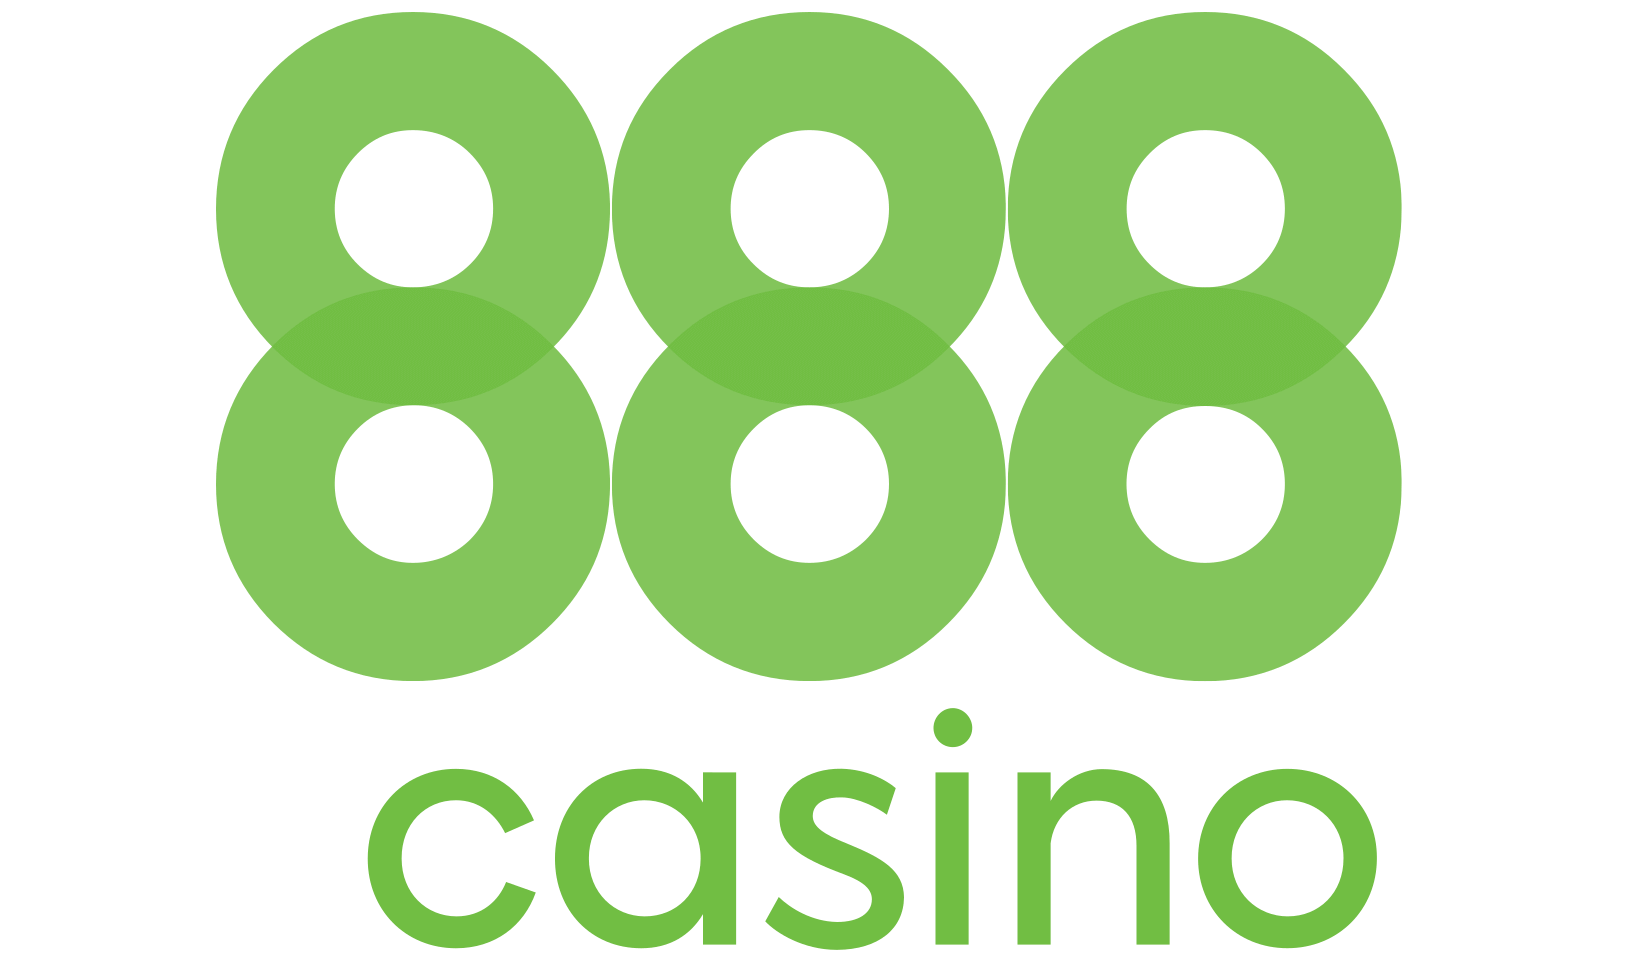 888 Casino bonus code